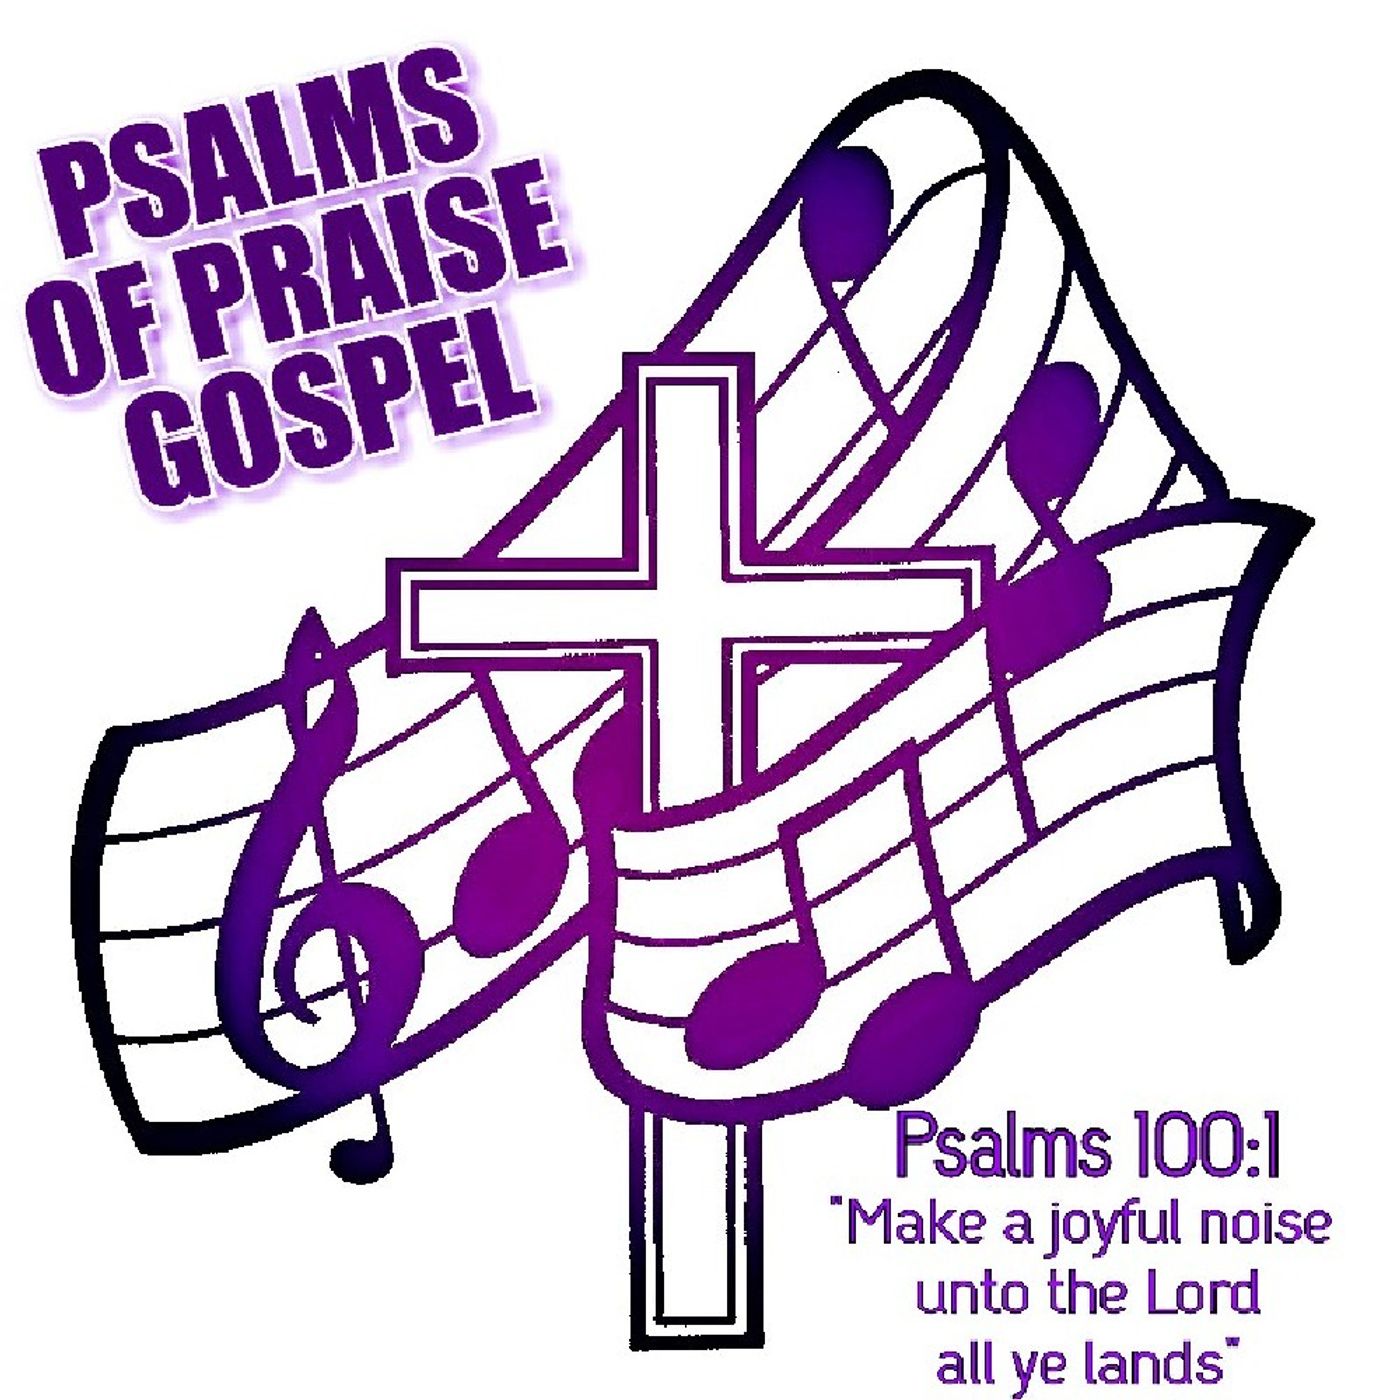 Psalms of Praise Gospel: Encouragement Through the Storm